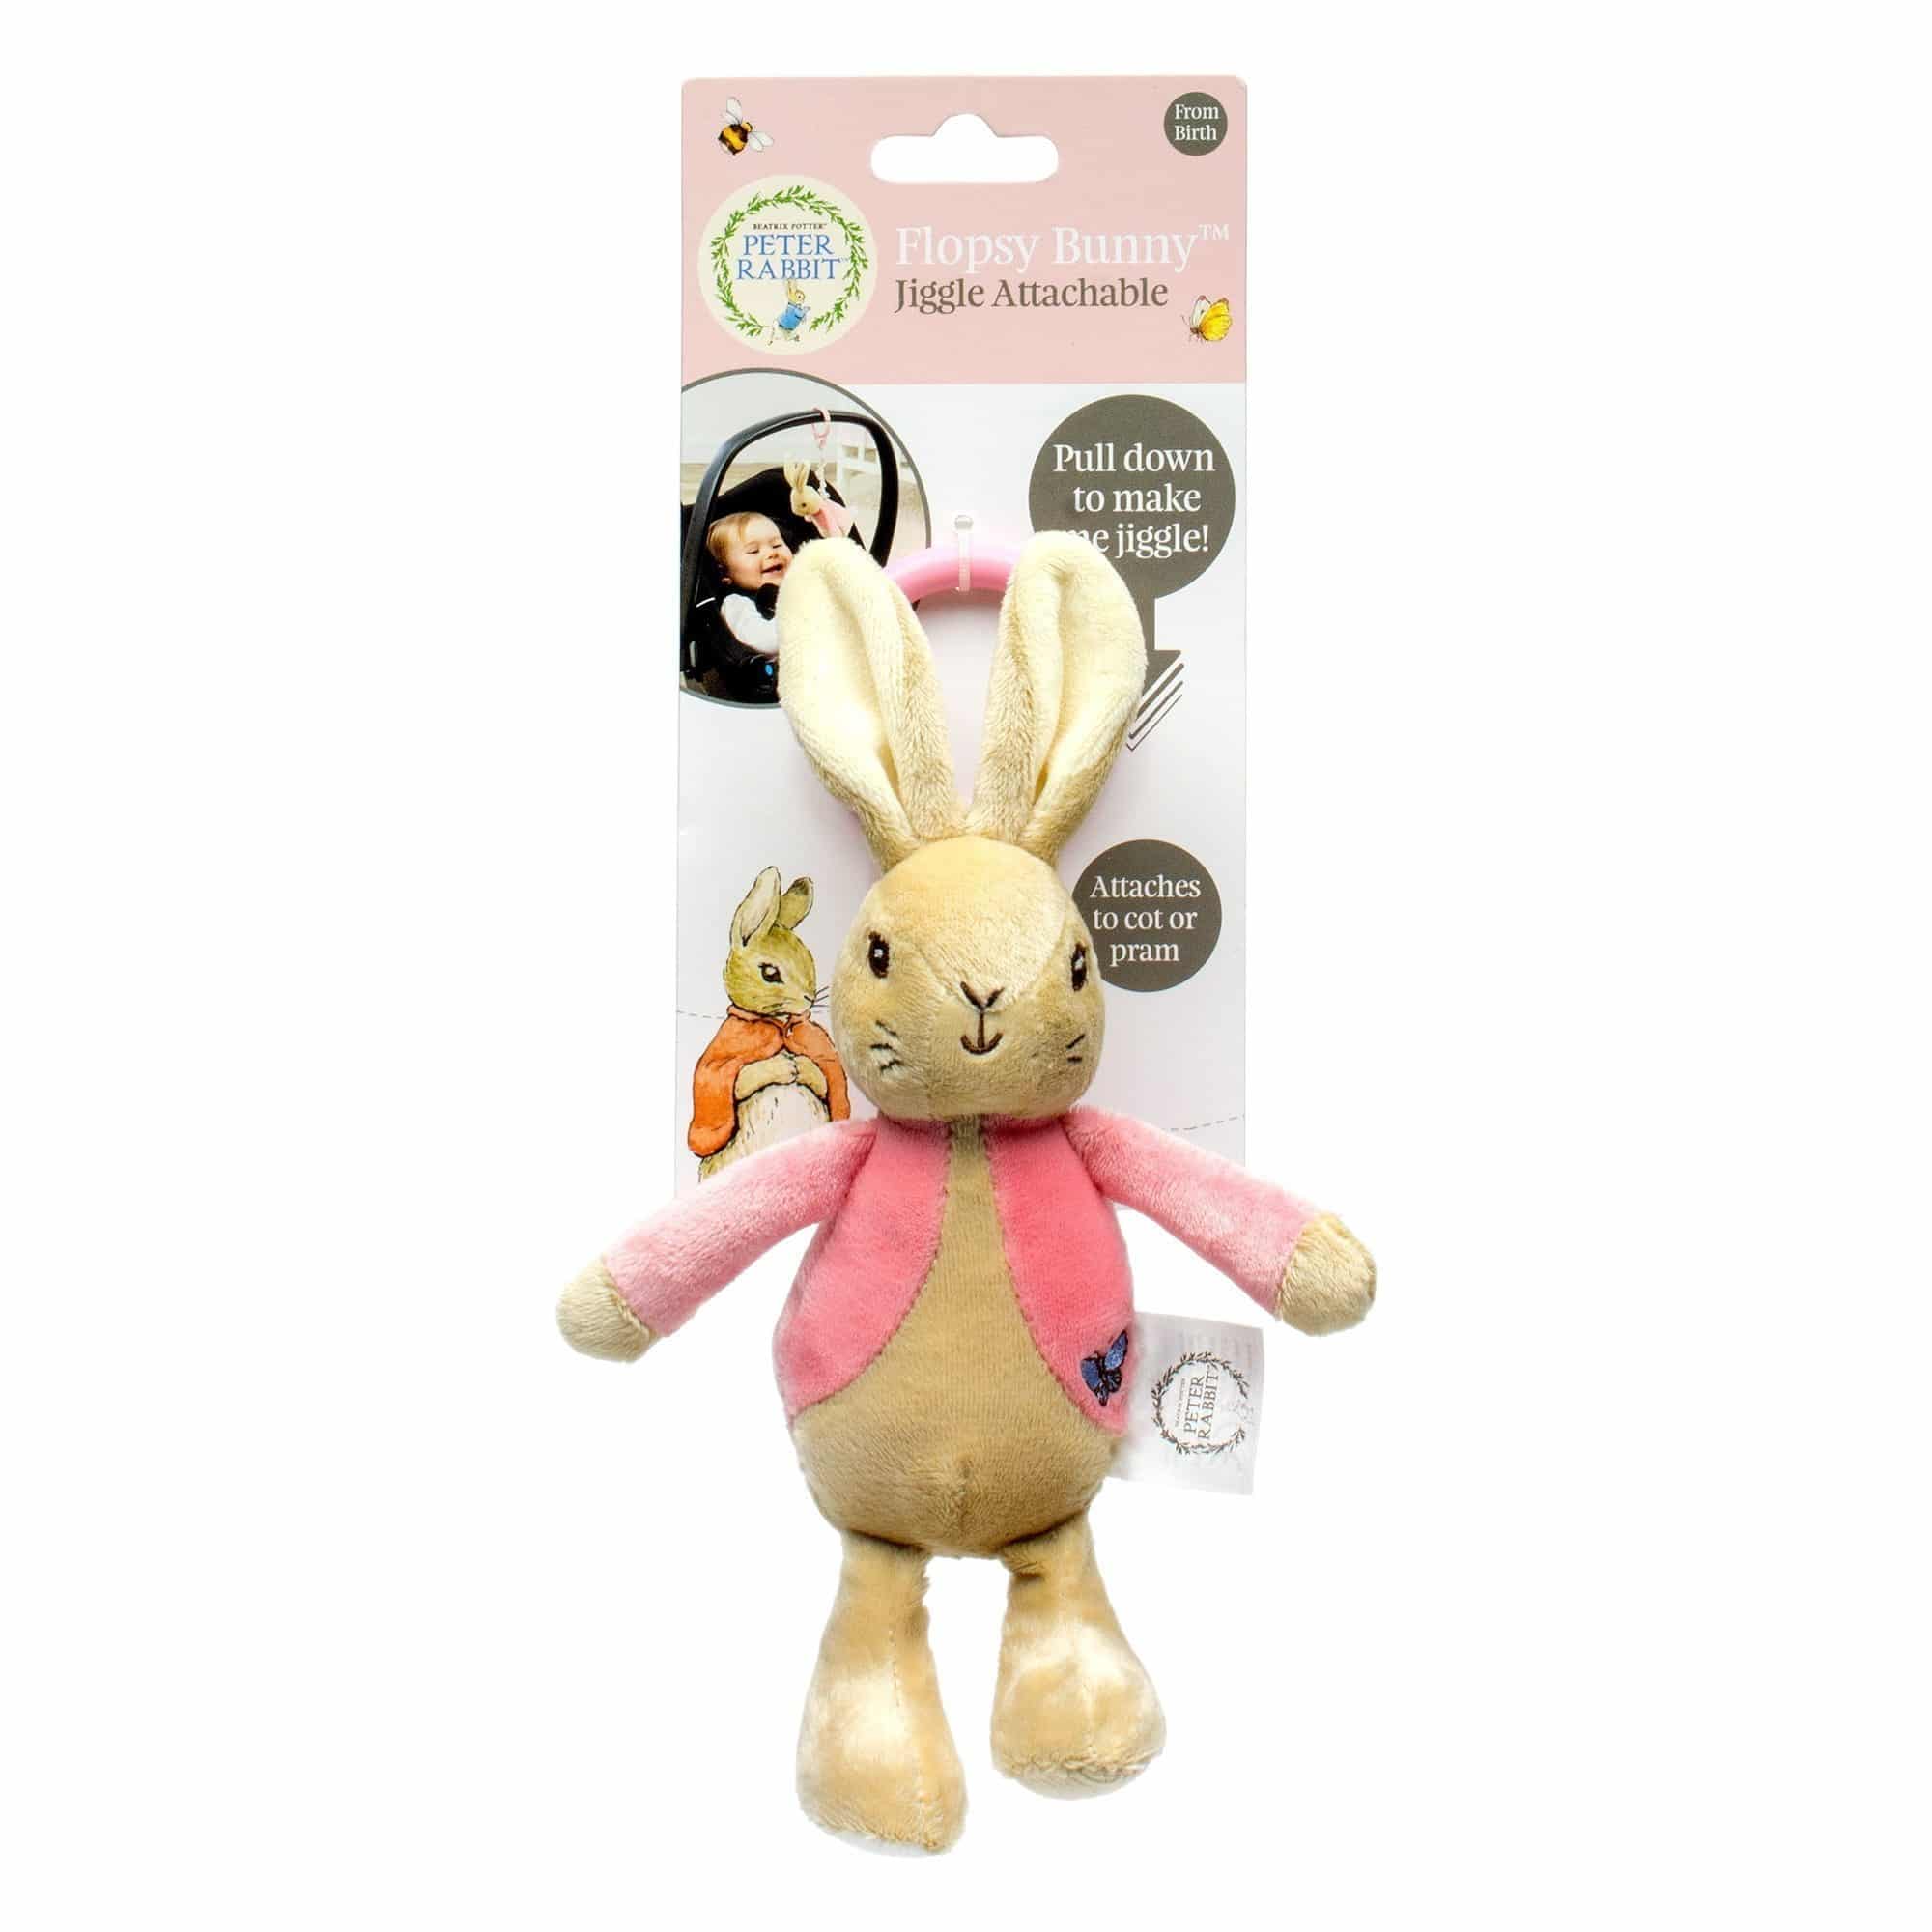 Peter Rabbit - Flopsy Bunny Jiggle Attachable